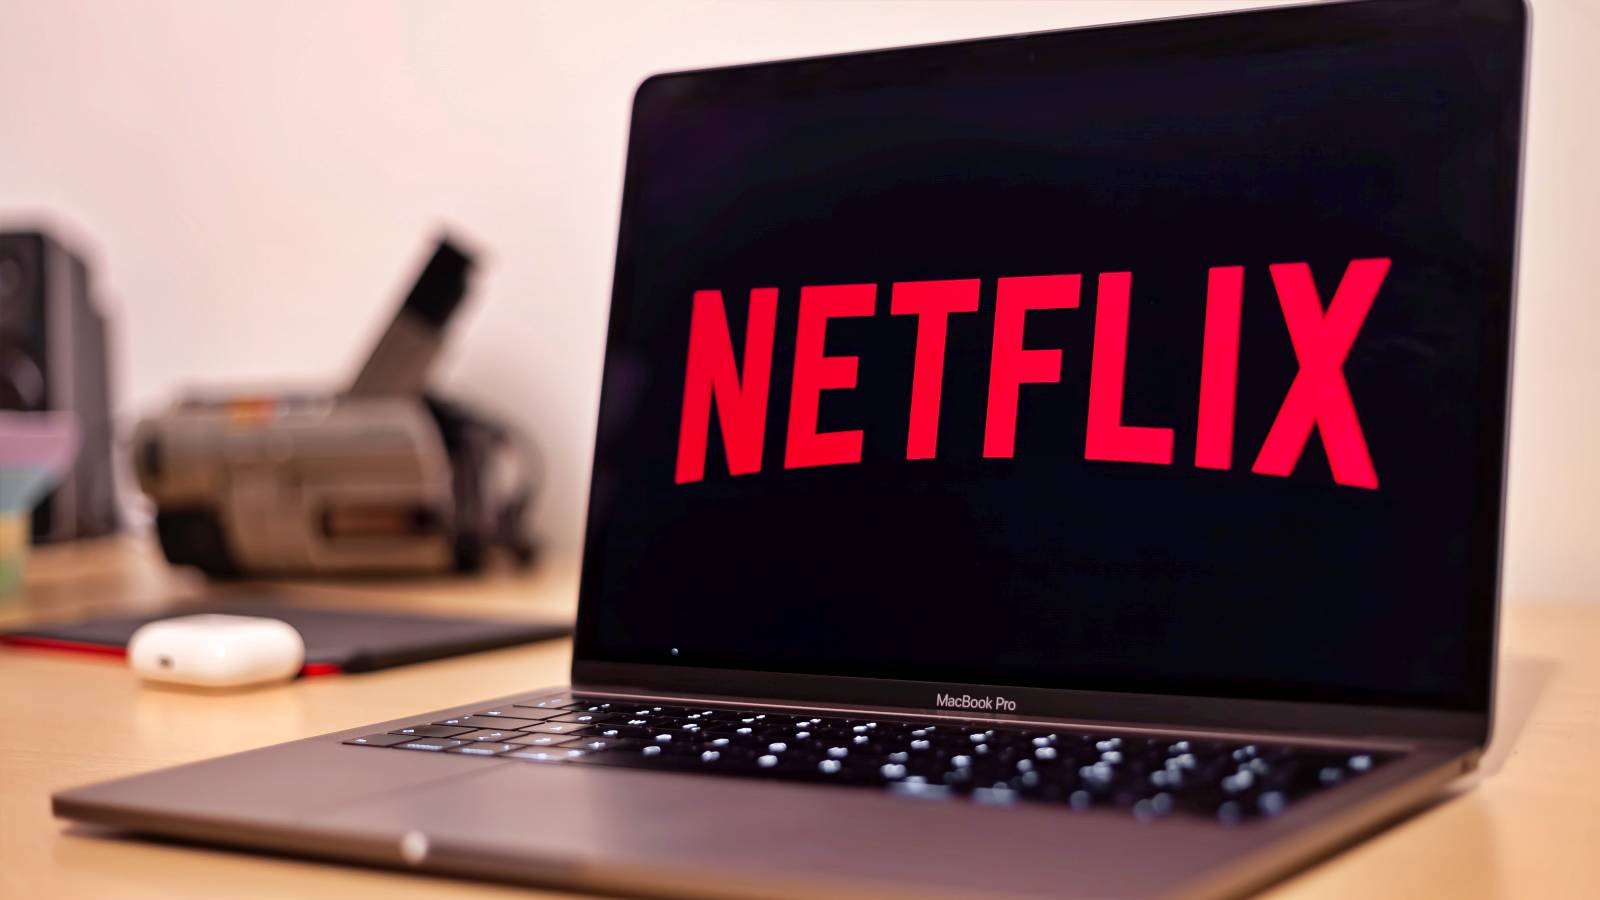 Netflix ATENTIONEAZA Oameni Explicatii IMPORTANTE Publicat